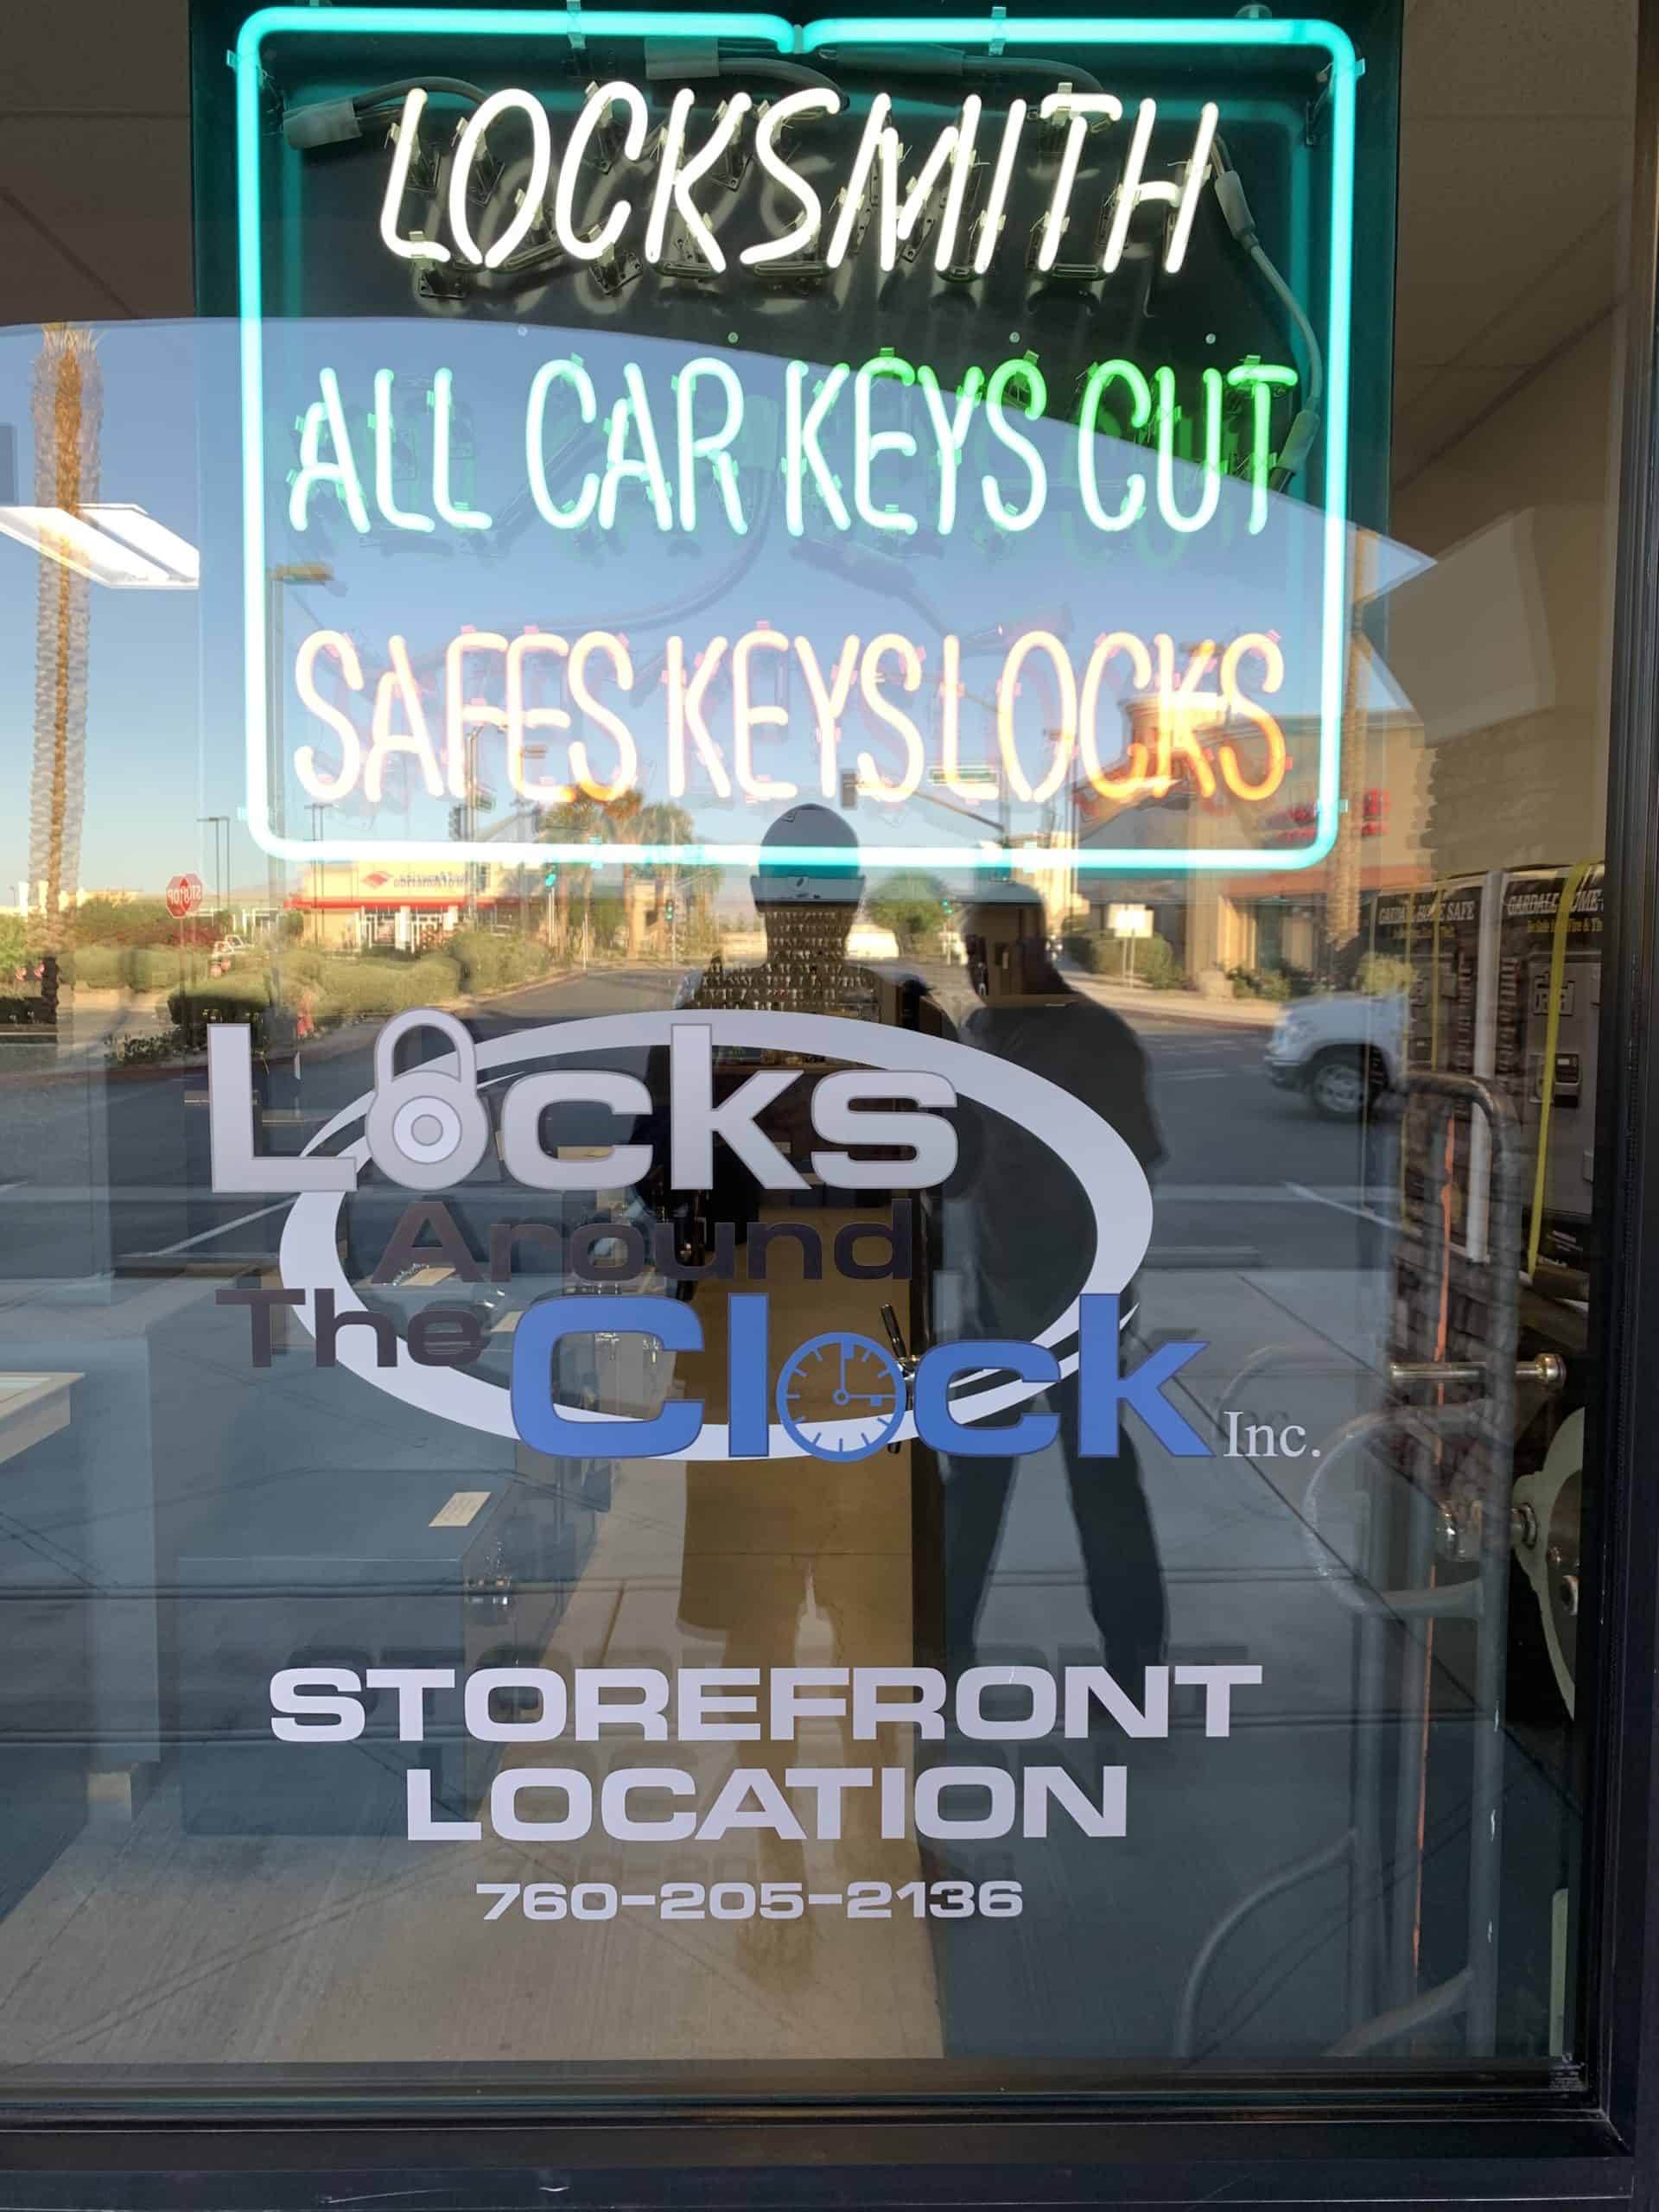 Locksmith All car keys